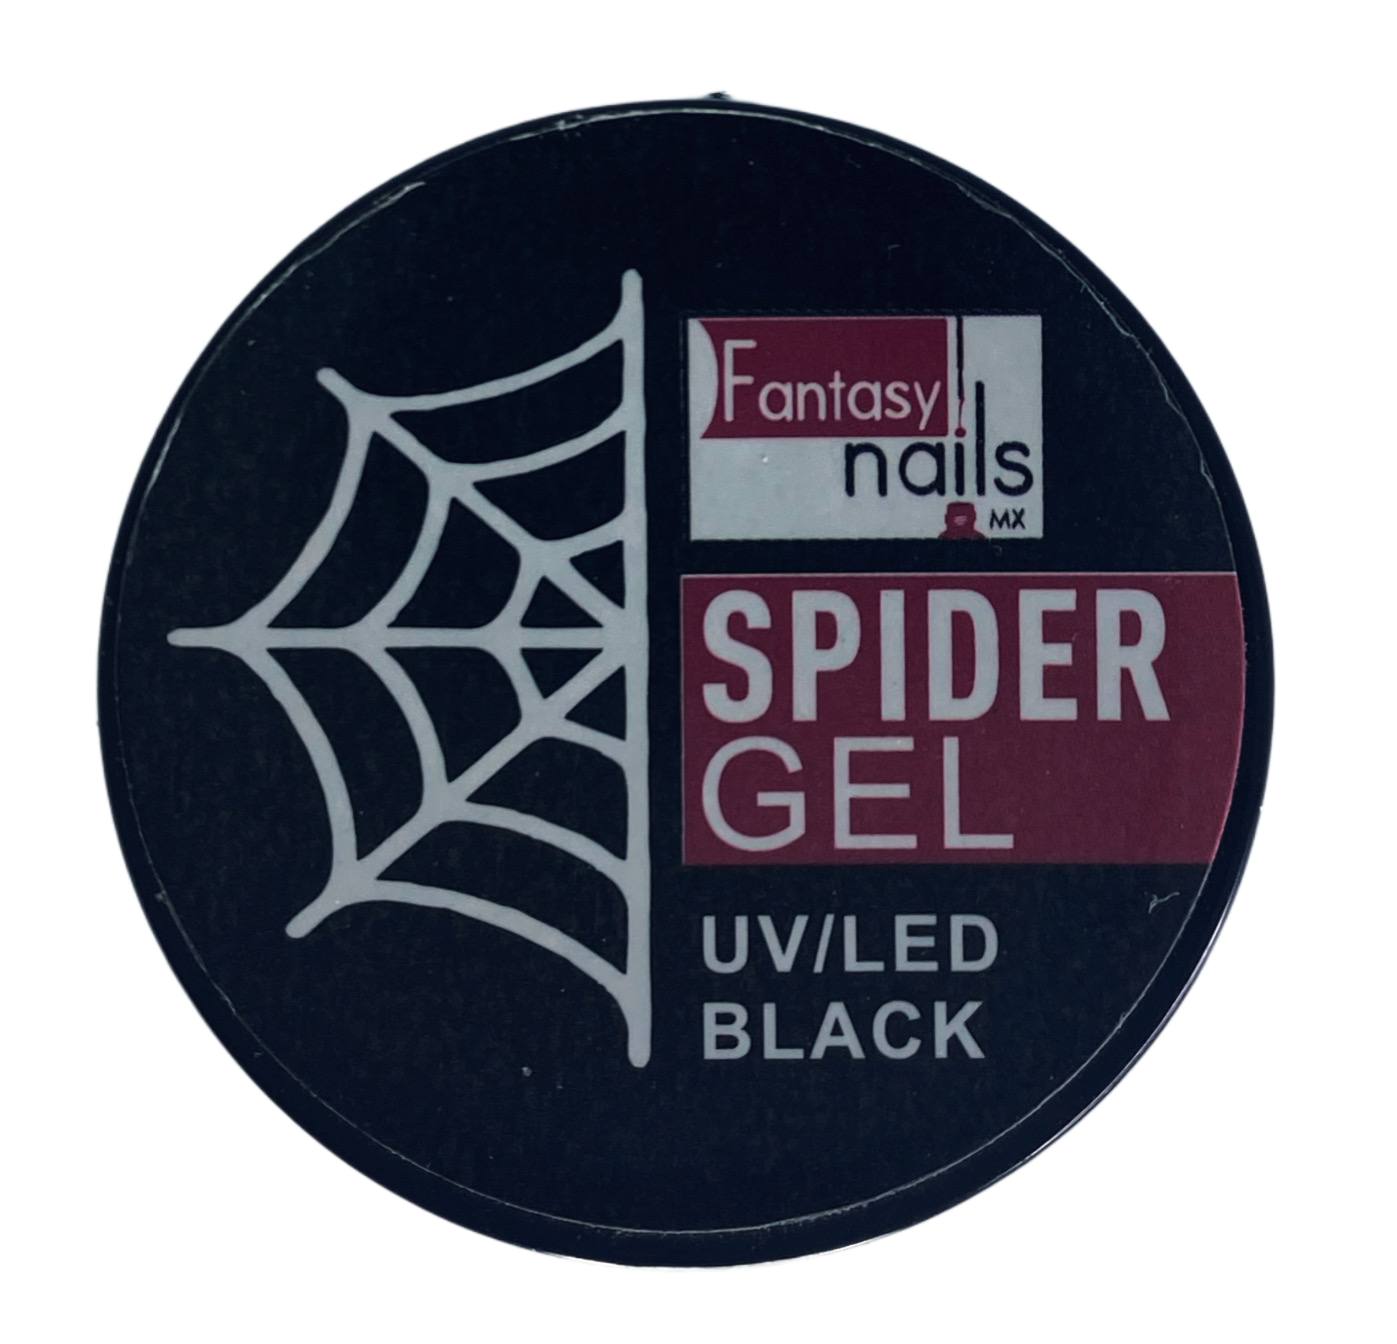 Spider Gel Black (negro) Fantasy Nails